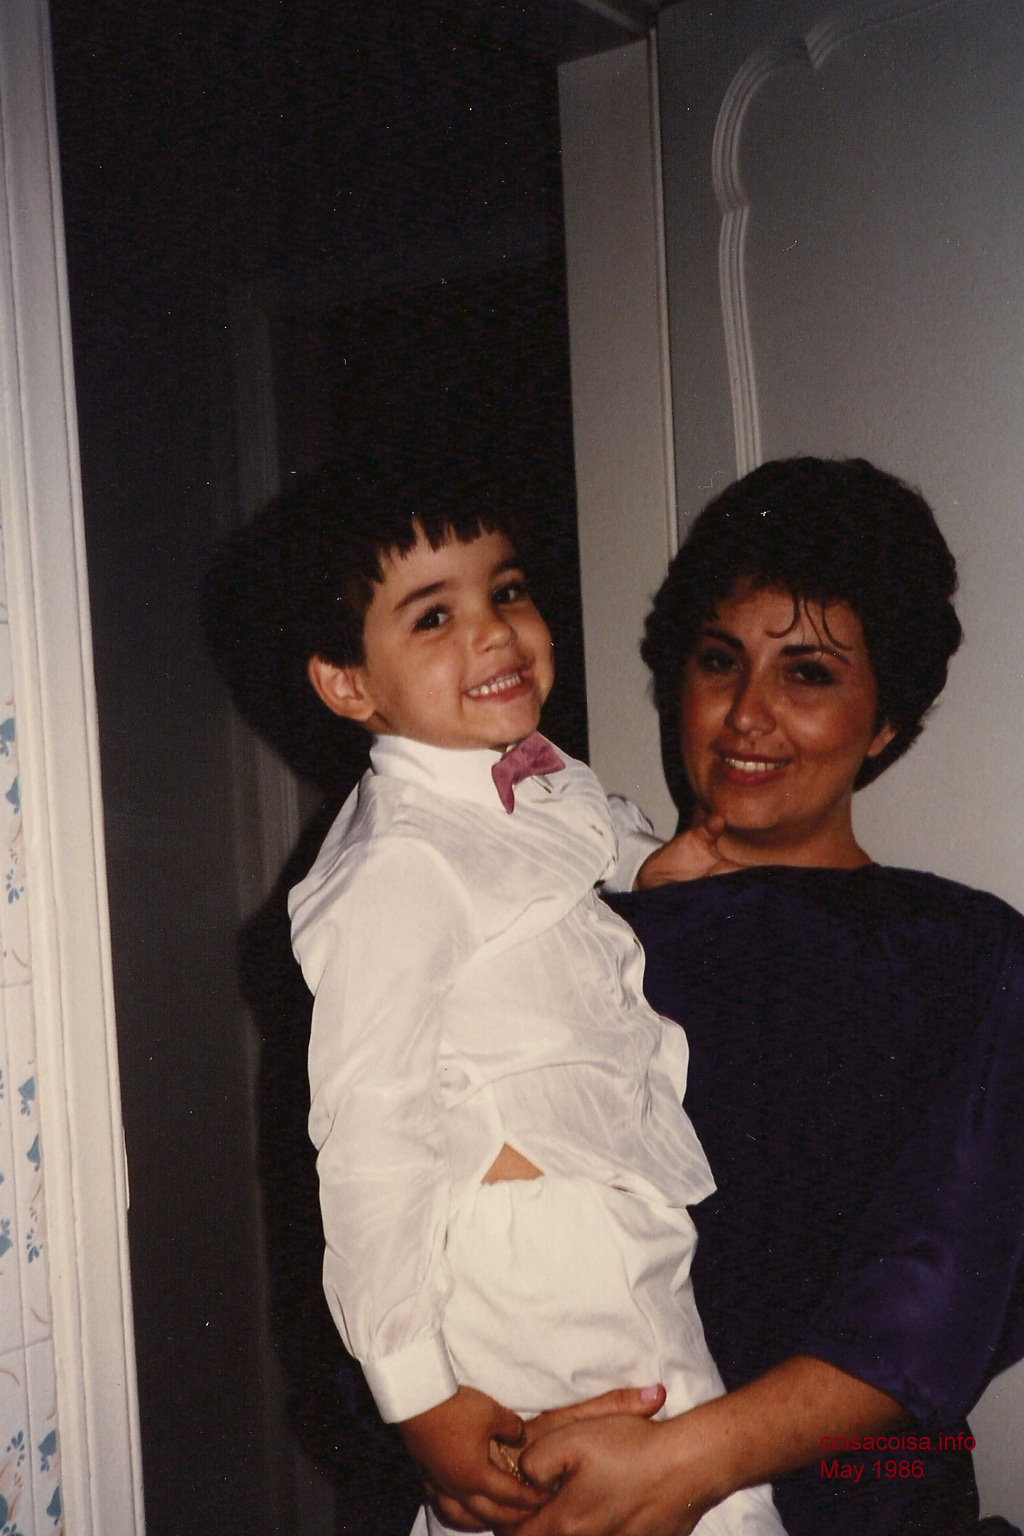 Ana with her son Rodrigo